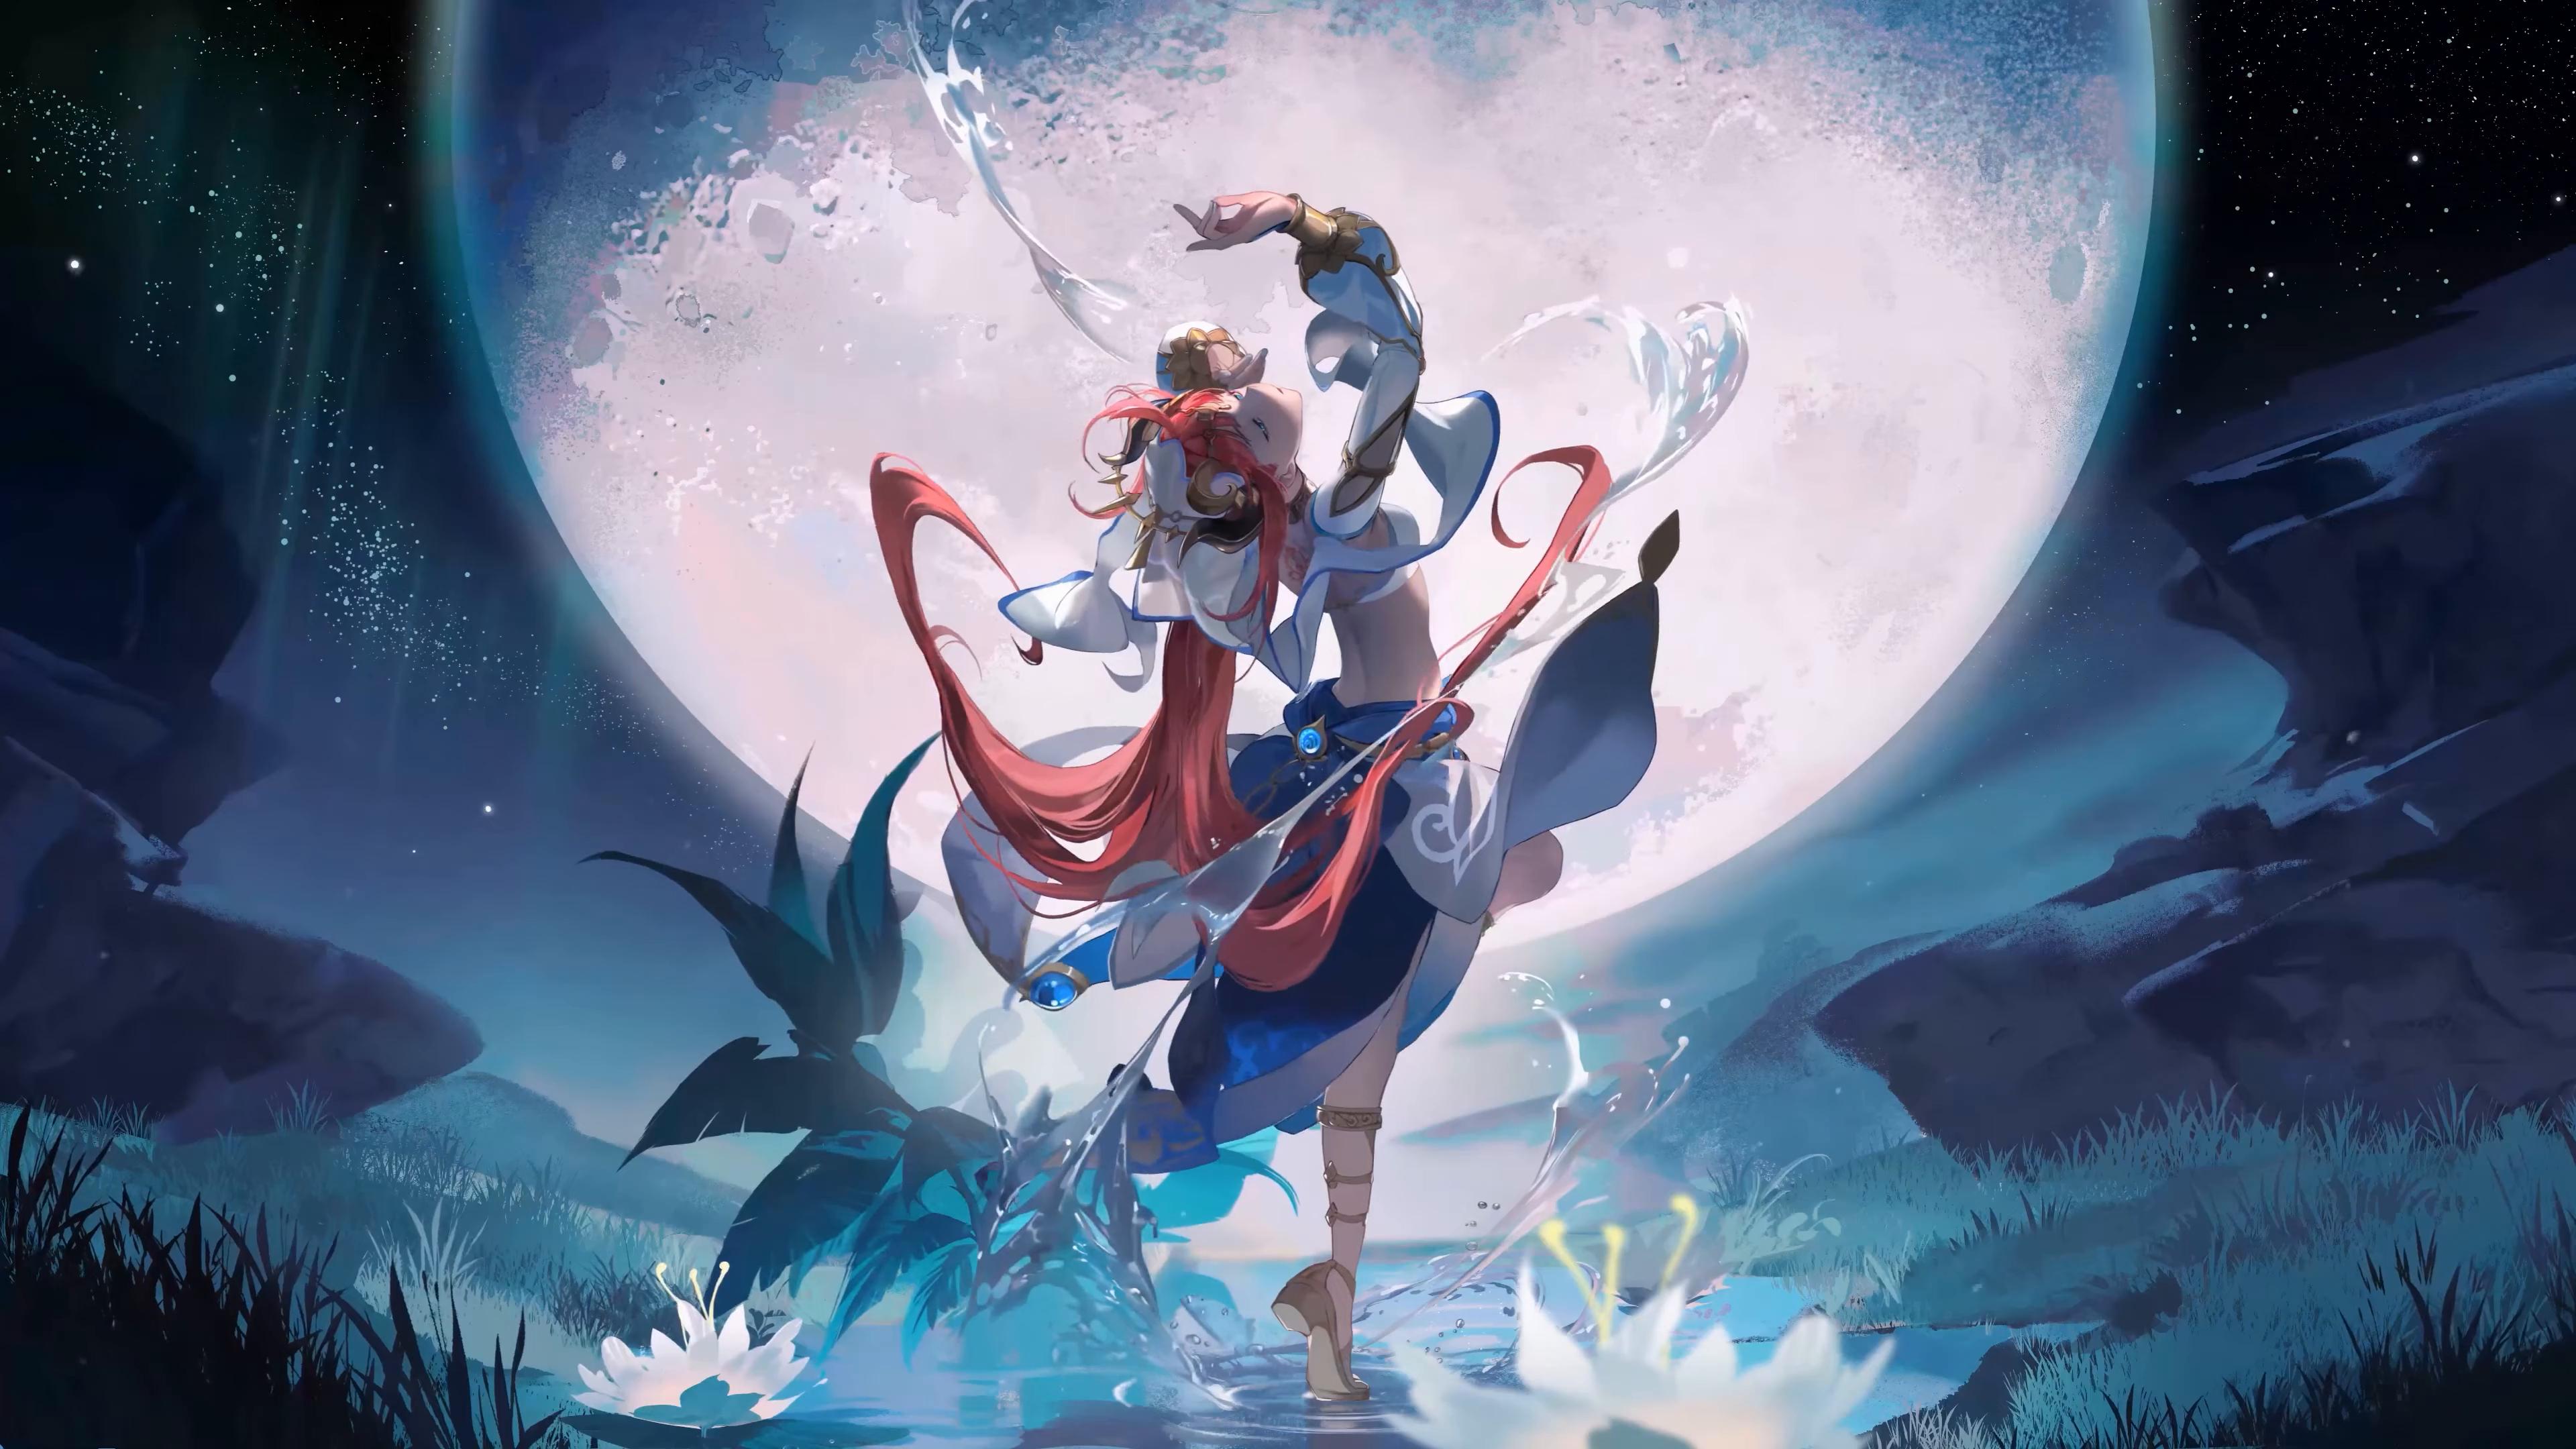 Wallpaper water girl magic Genshin Impact Nilou images for desktop  section игры  download